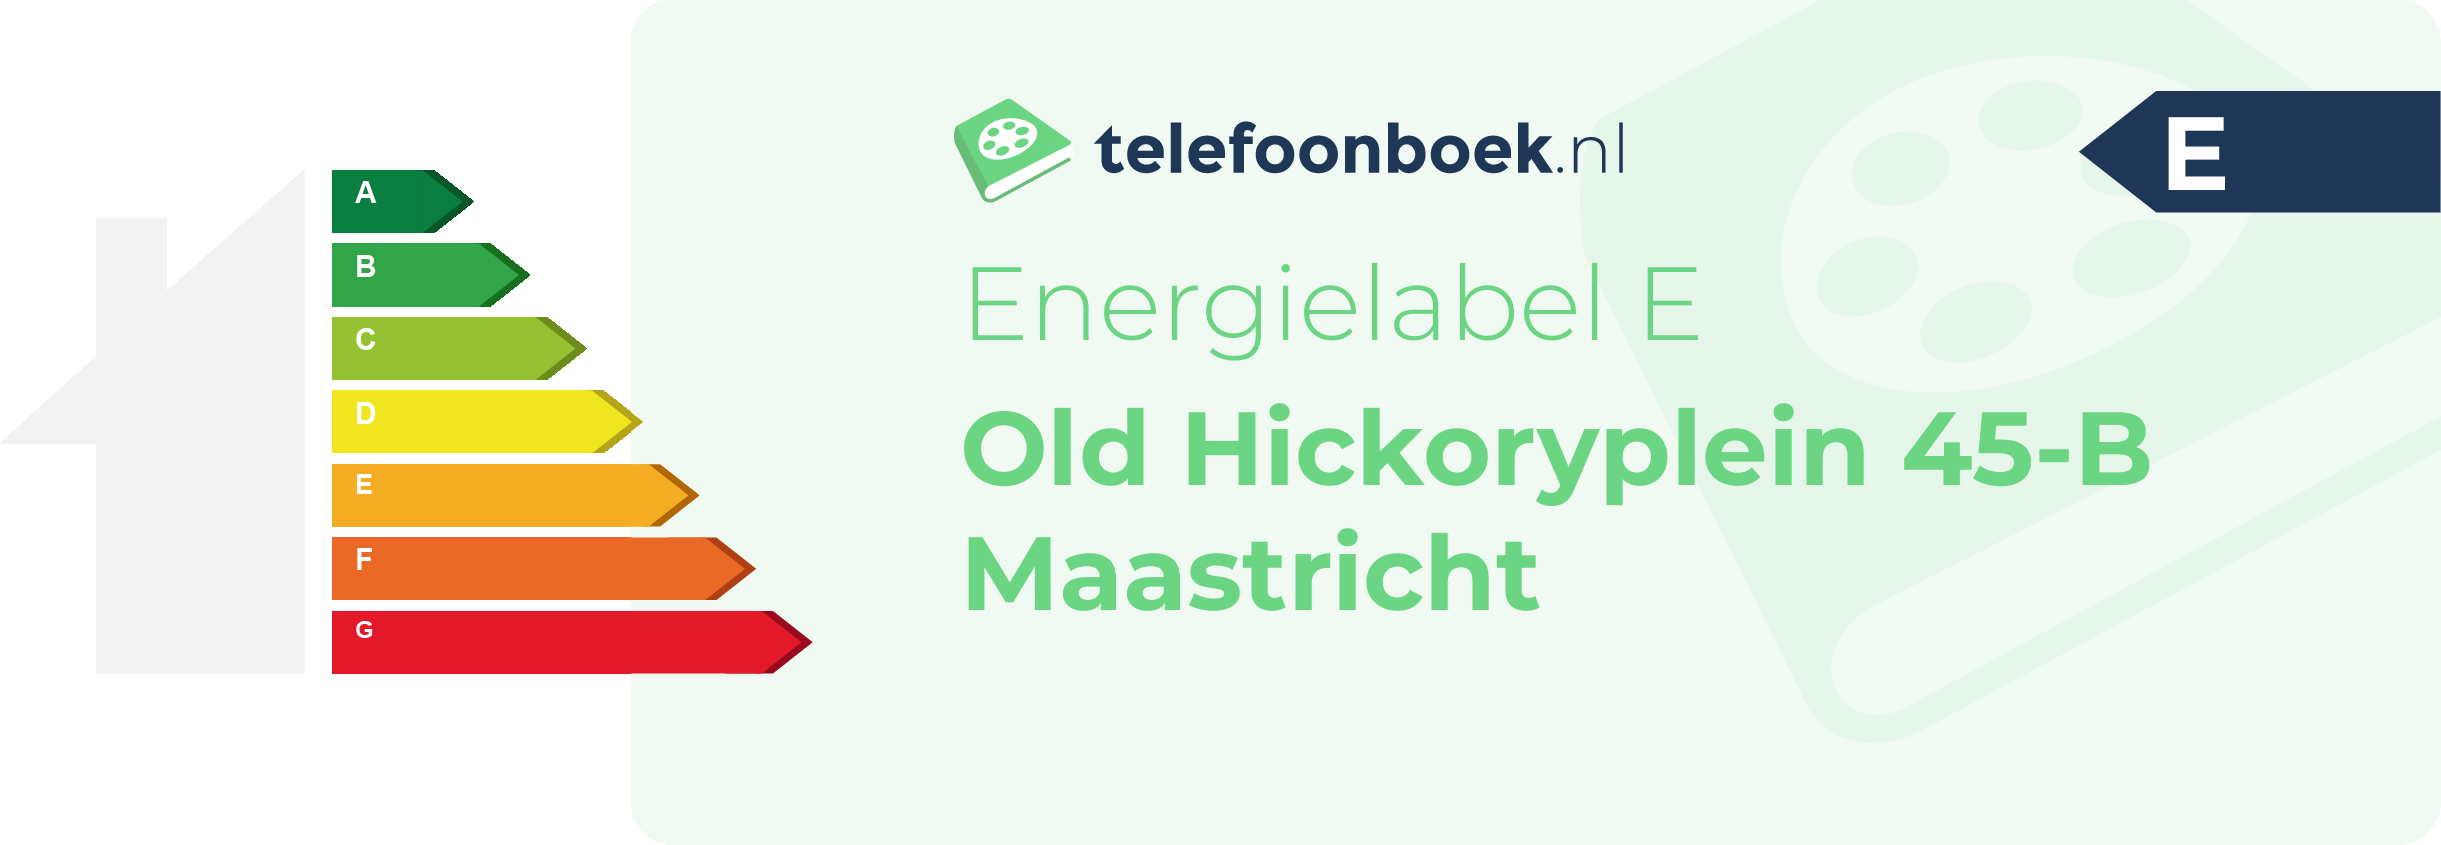 Energielabel Old Hickoryplein 45-B Maastricht